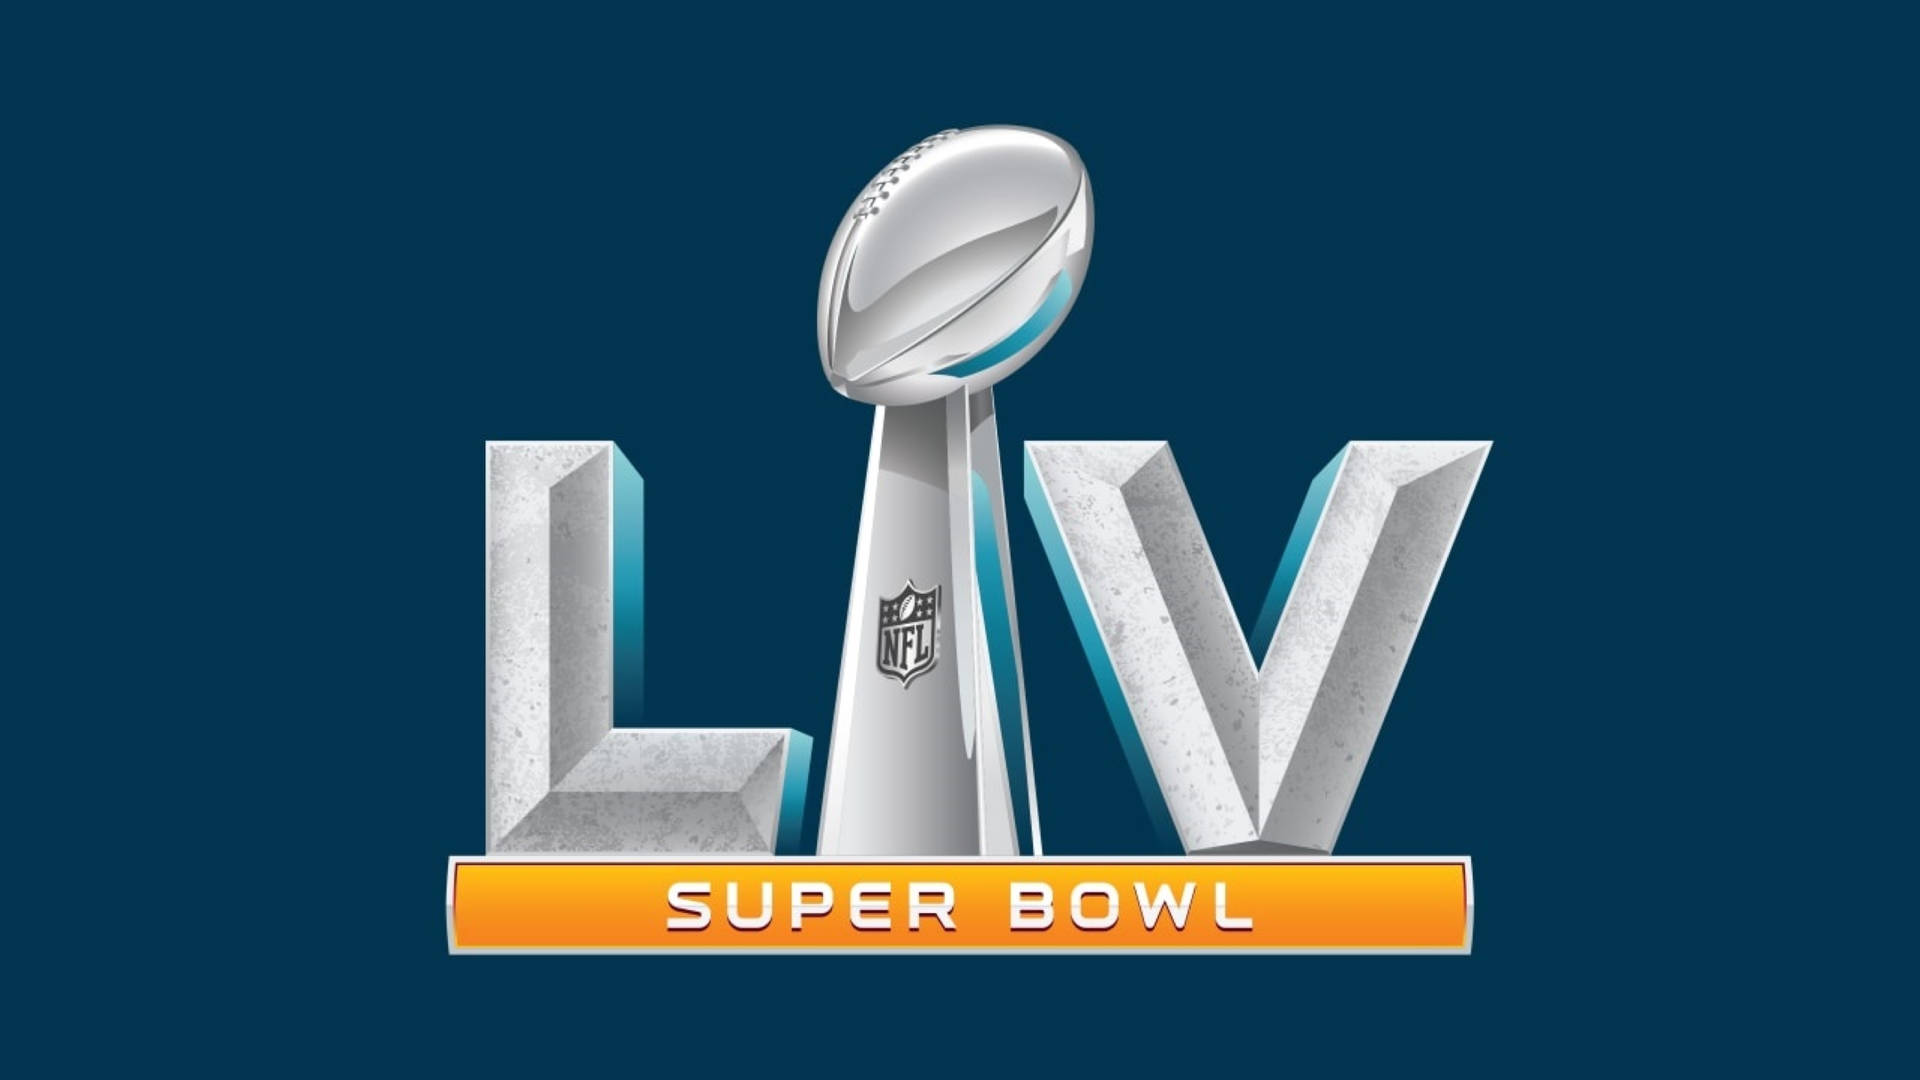 Super Bowl Lv 2021 Logo Background